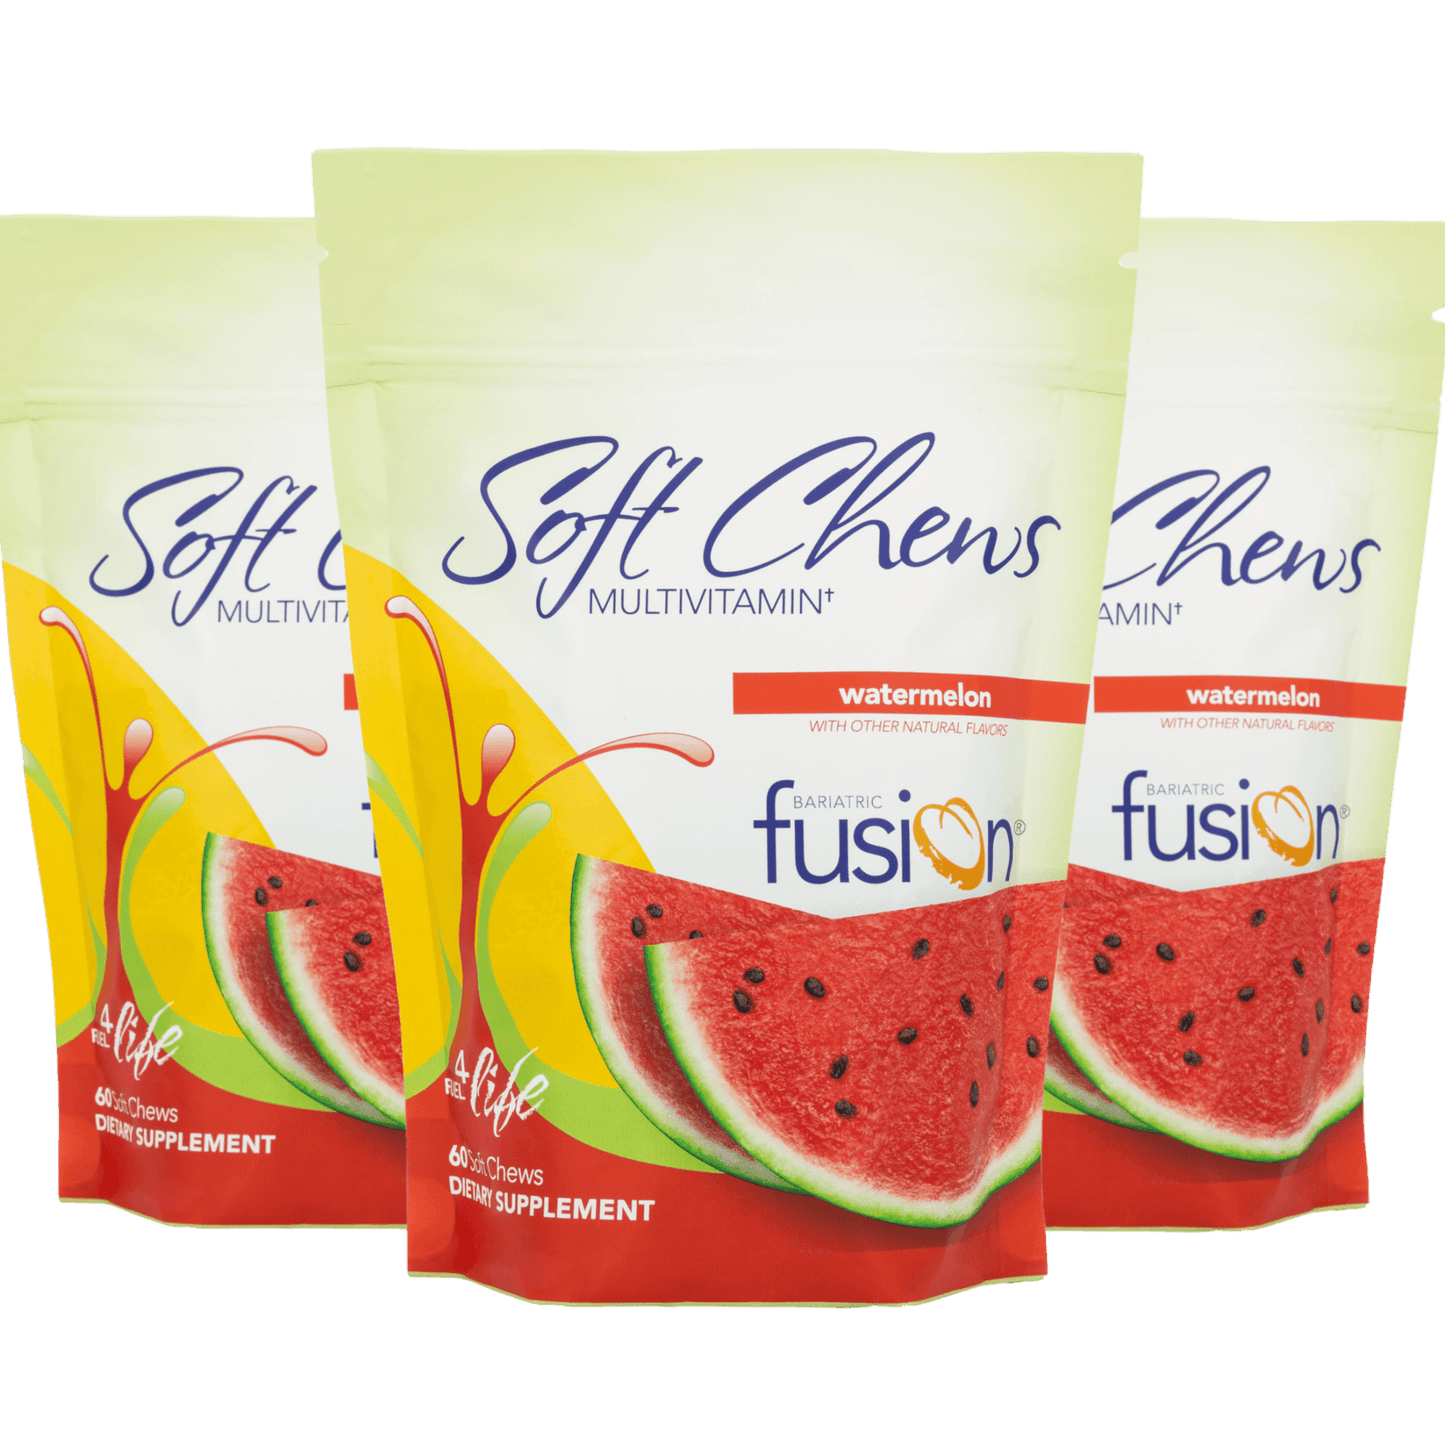 Bundle and Save - Watermelon Soft Chews Bariatric Multivitamin - Bariatric Fusion